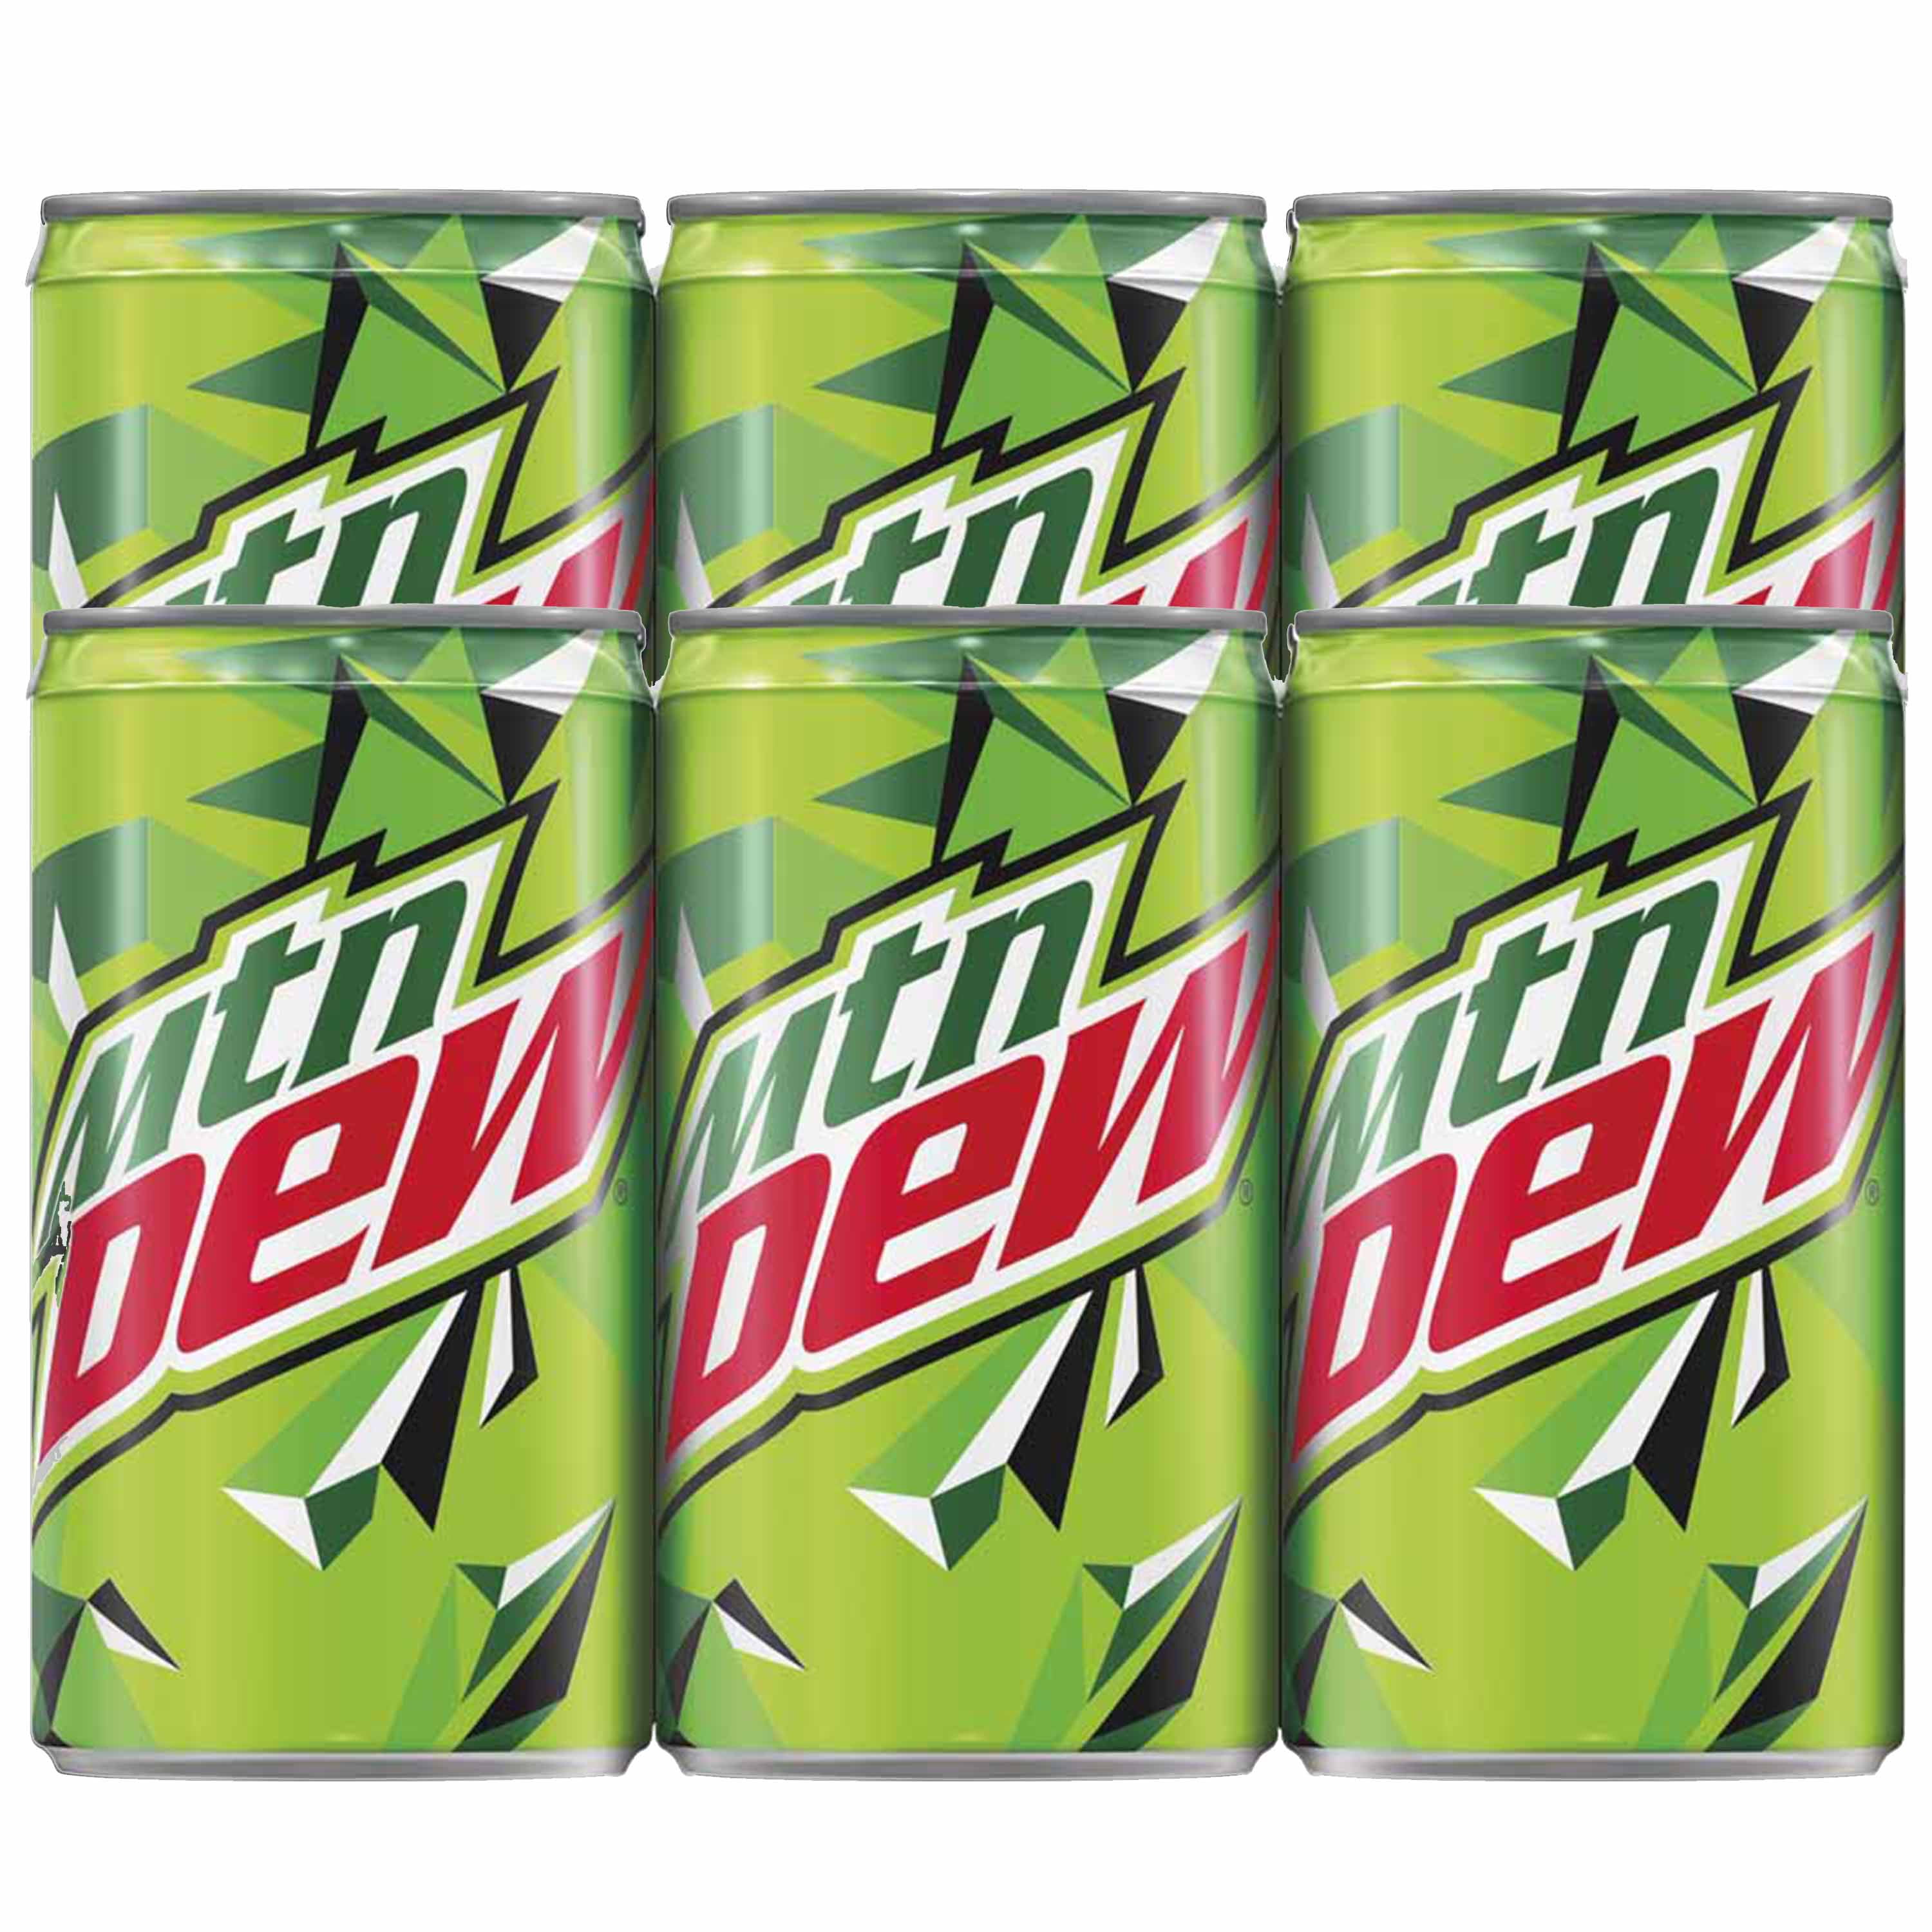 Mountain Dew Citrus Soda Pop, 7.5 oz, 6 Pack Mini Cans